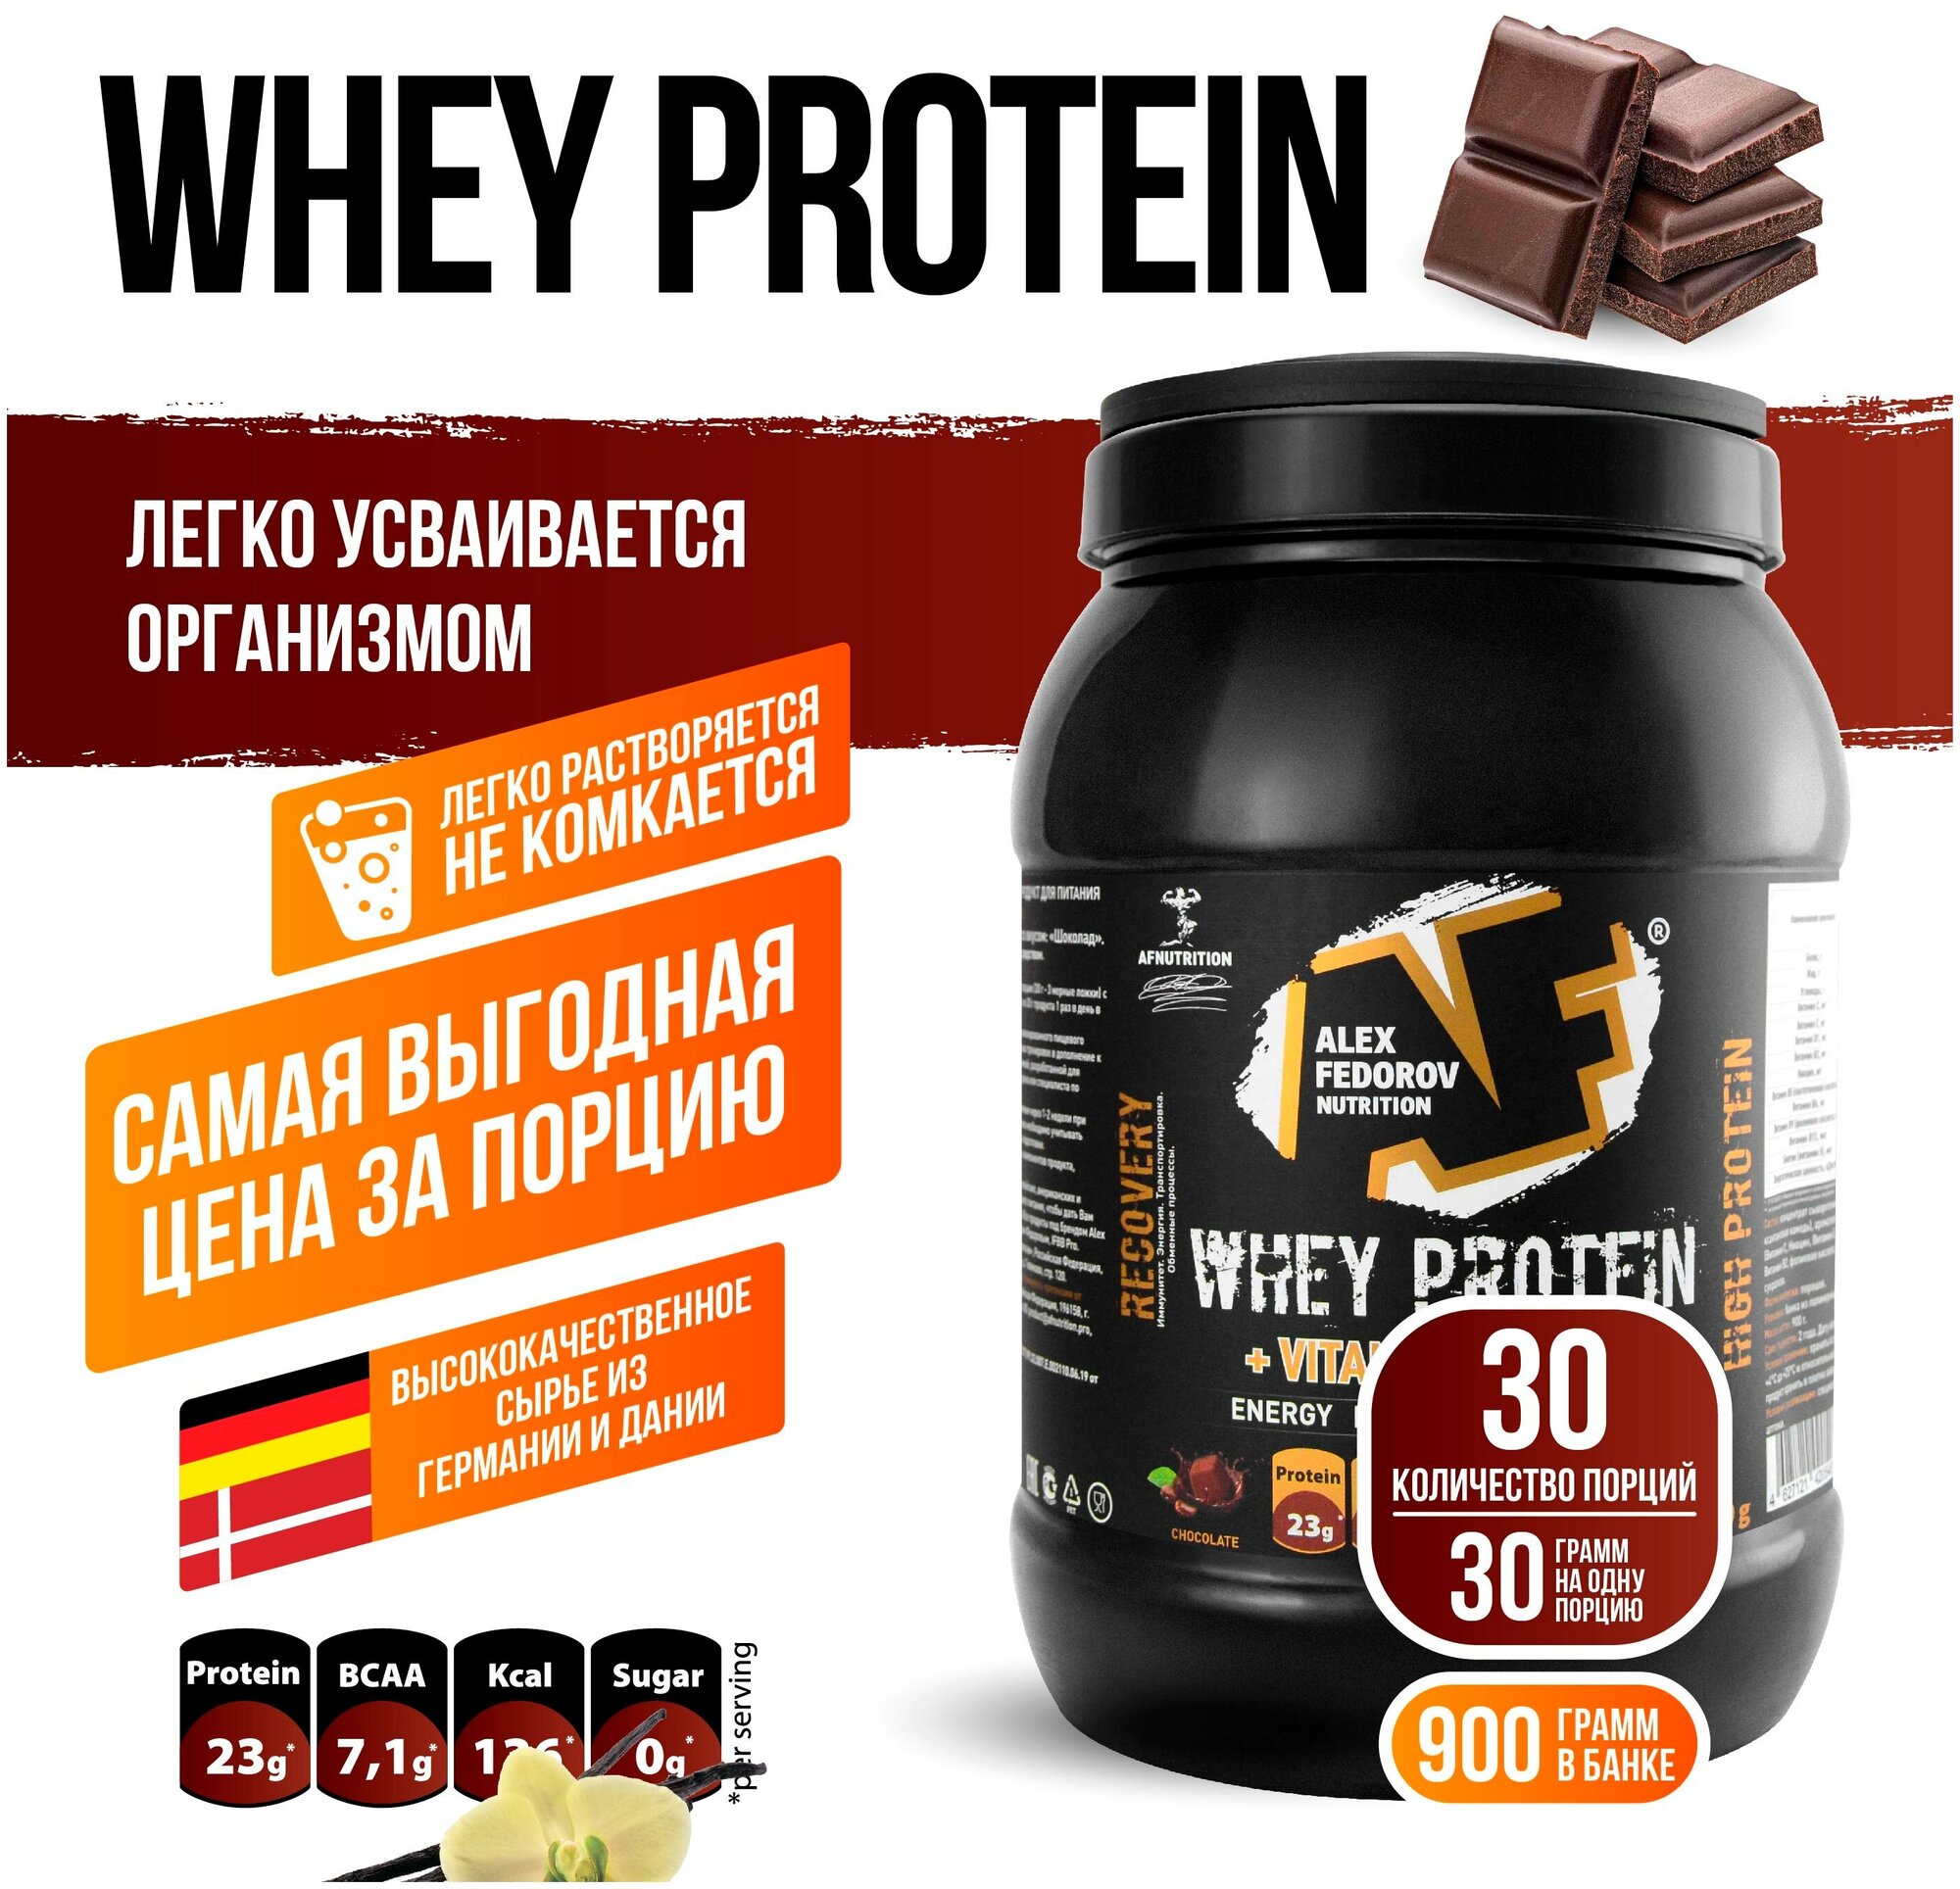 Протеин, Protein, Alex Fedorov Nutrition "Whey Protein", протеин сывороточный, шоколад, 900 г